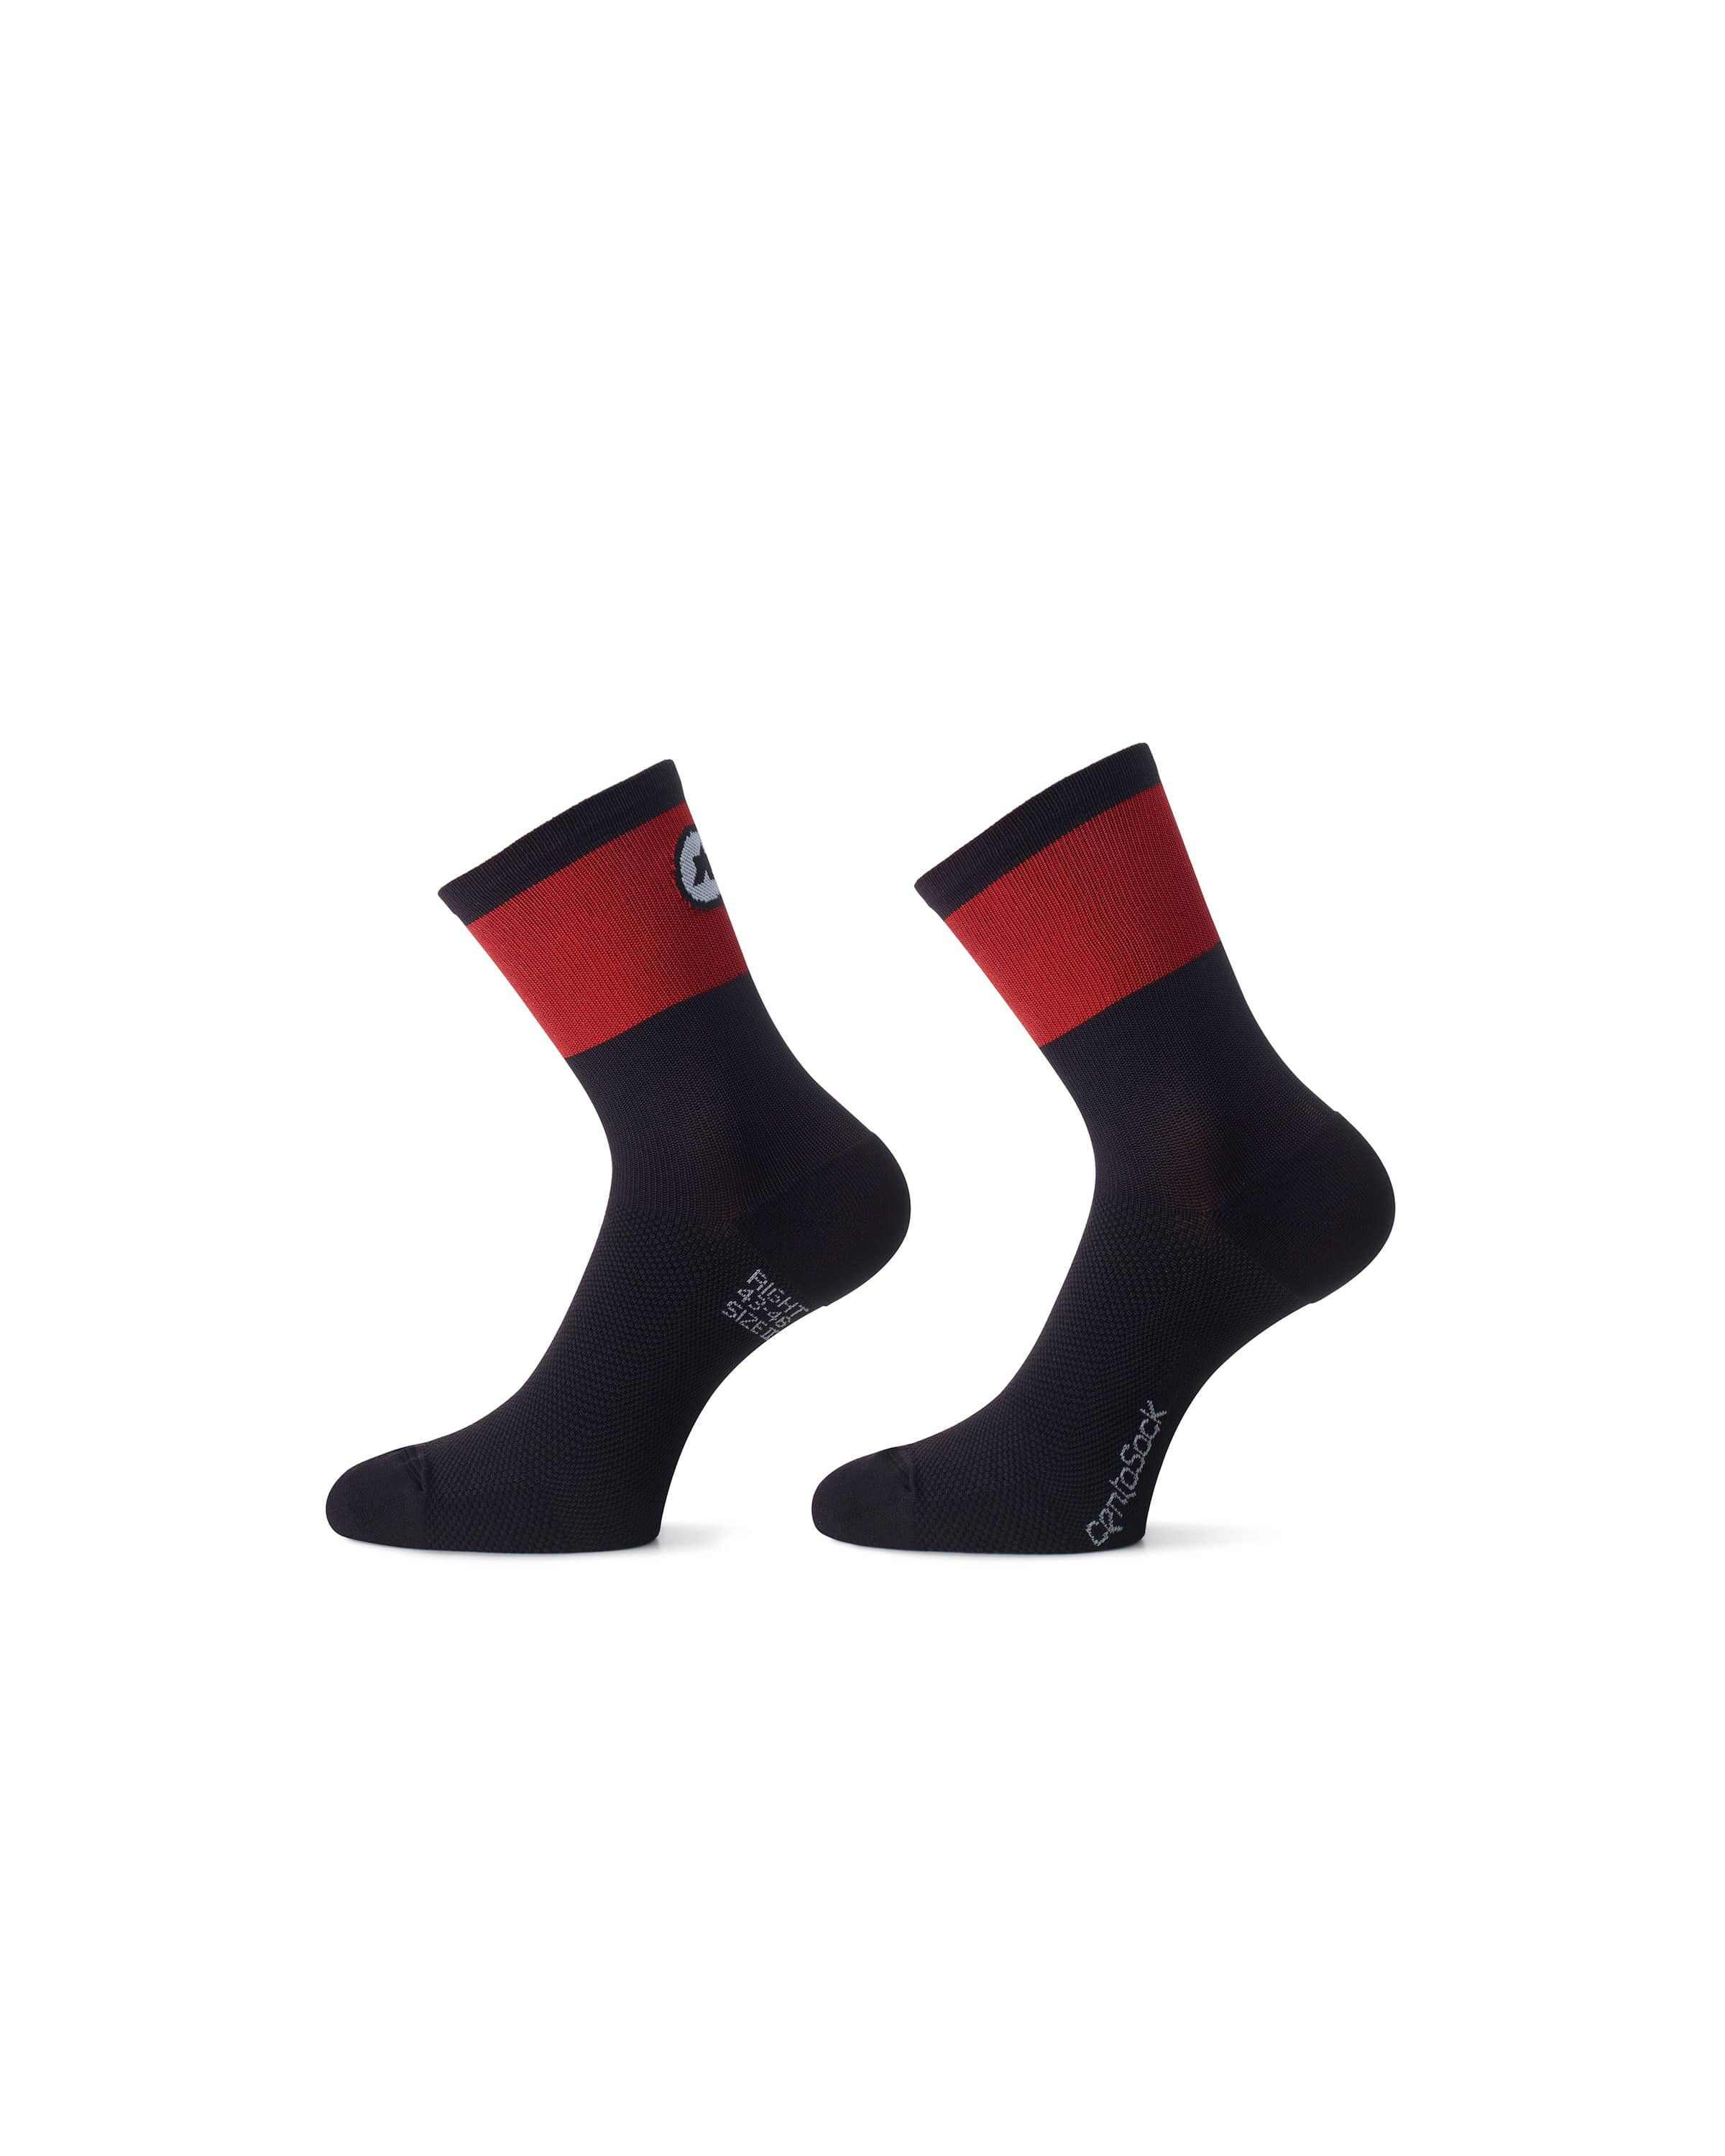 Assos Cento Socks Evo 8 - Cycling socks